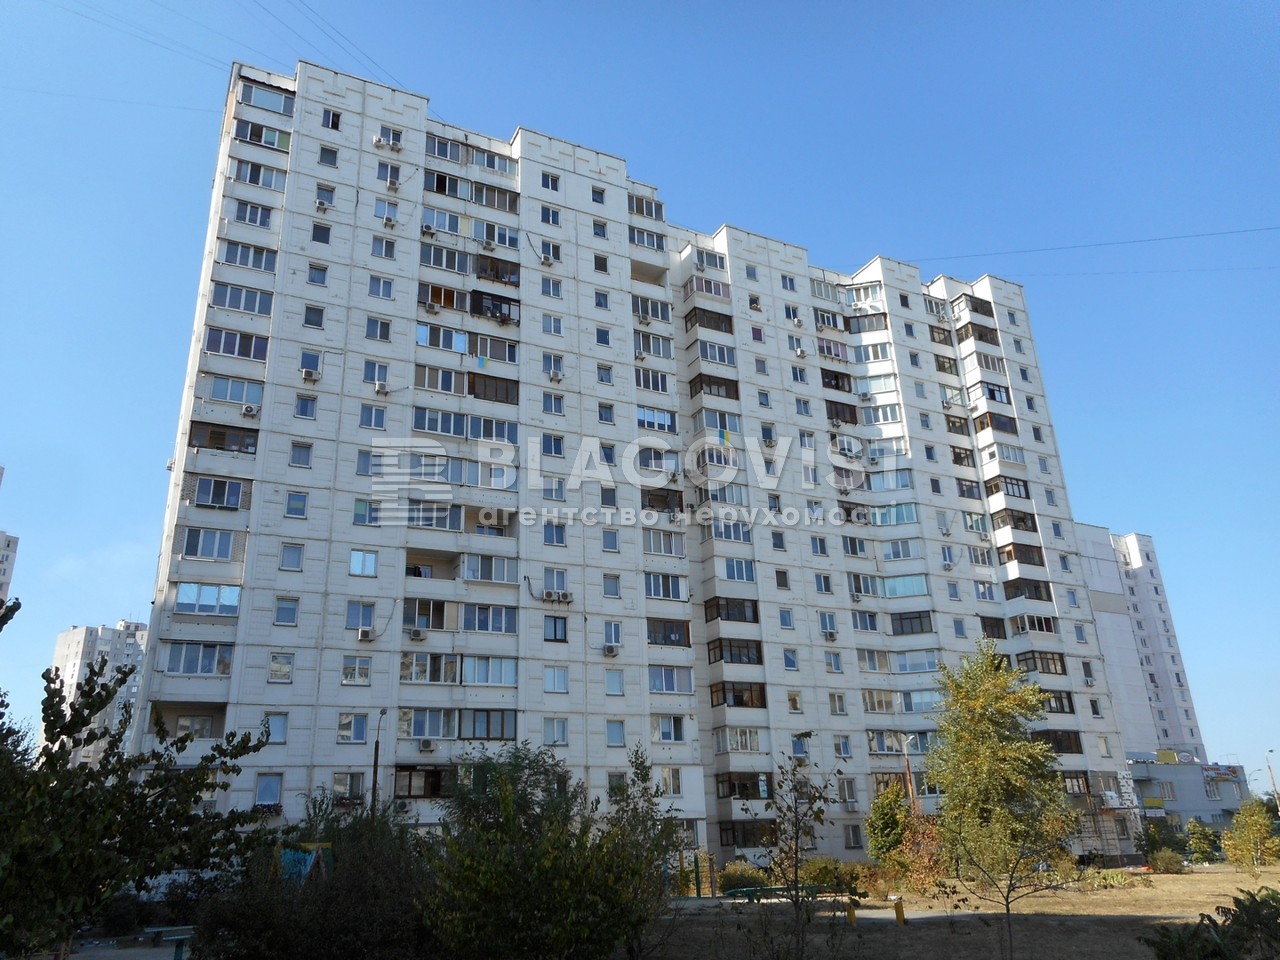 Квартира D-39843, Радунская, 11, Киев - Фото 2